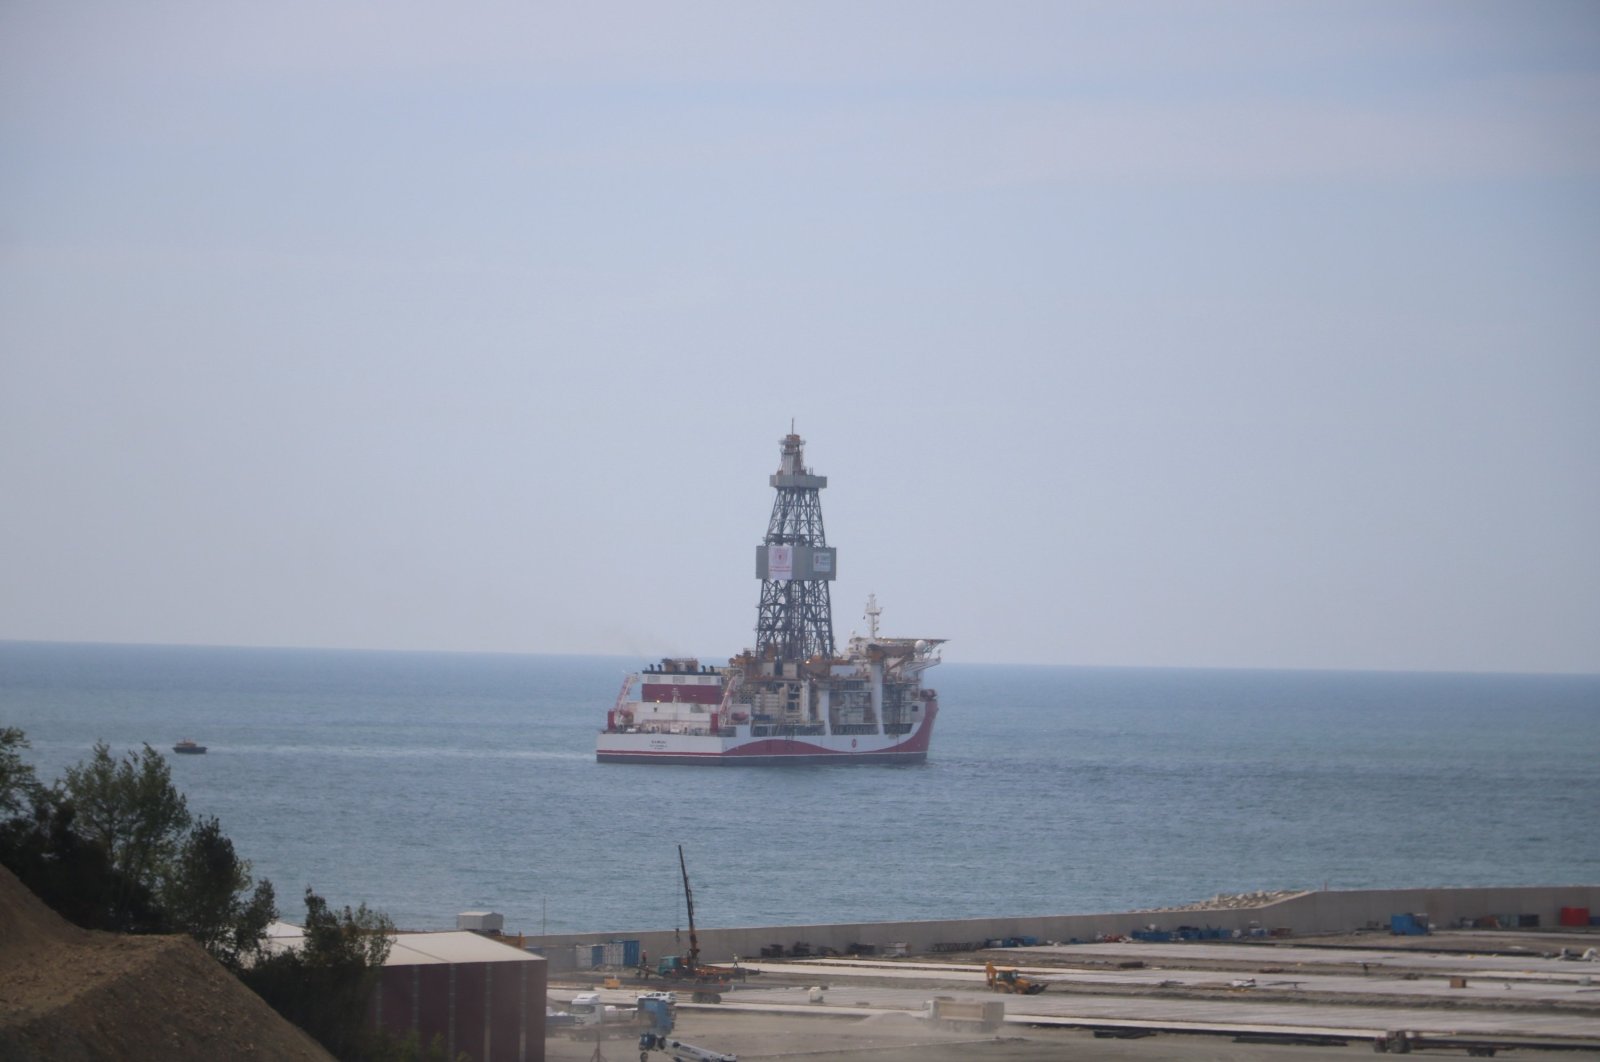 The drillship Kanuni is seen off the Port of Filyos in northern Zonguldak province, Turkey, May 4, 2021. (IHA Photo)